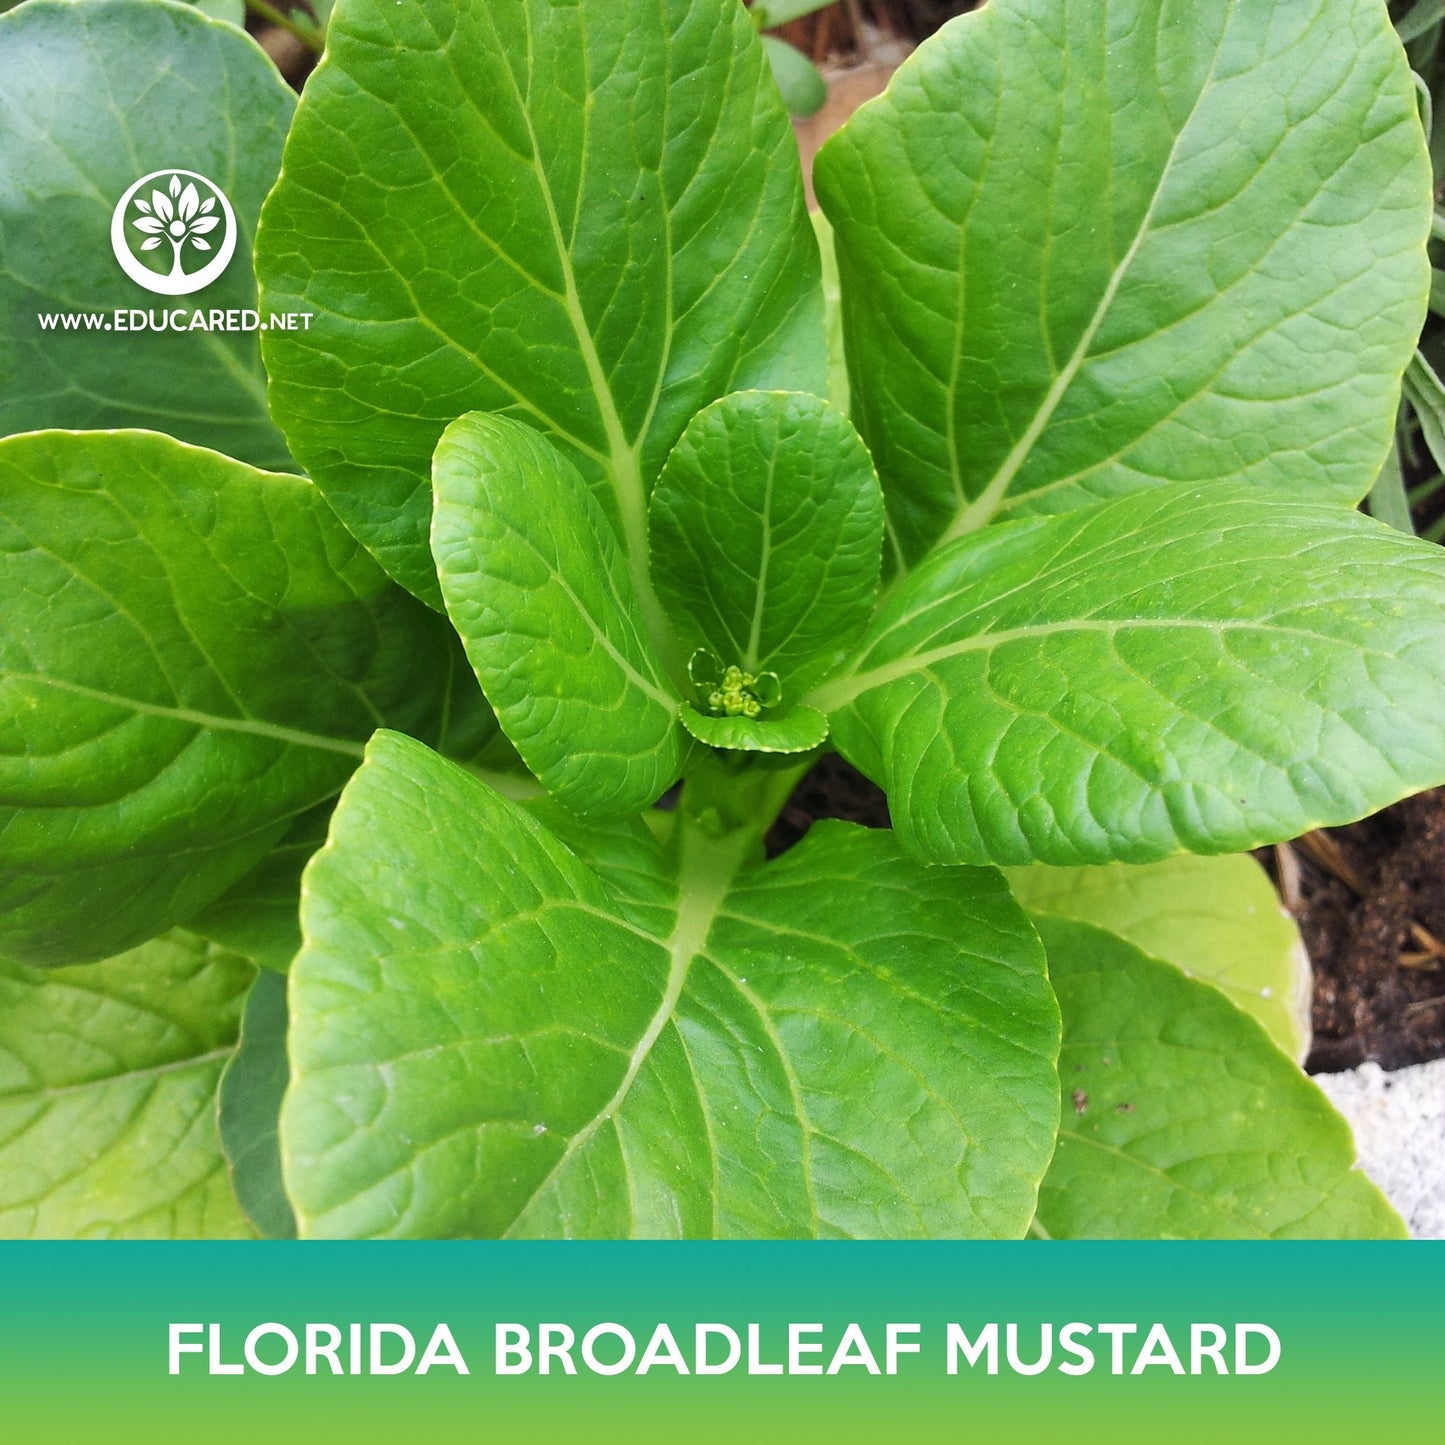 Florida Broadleaf Mustard Seeds, Brassica juncea